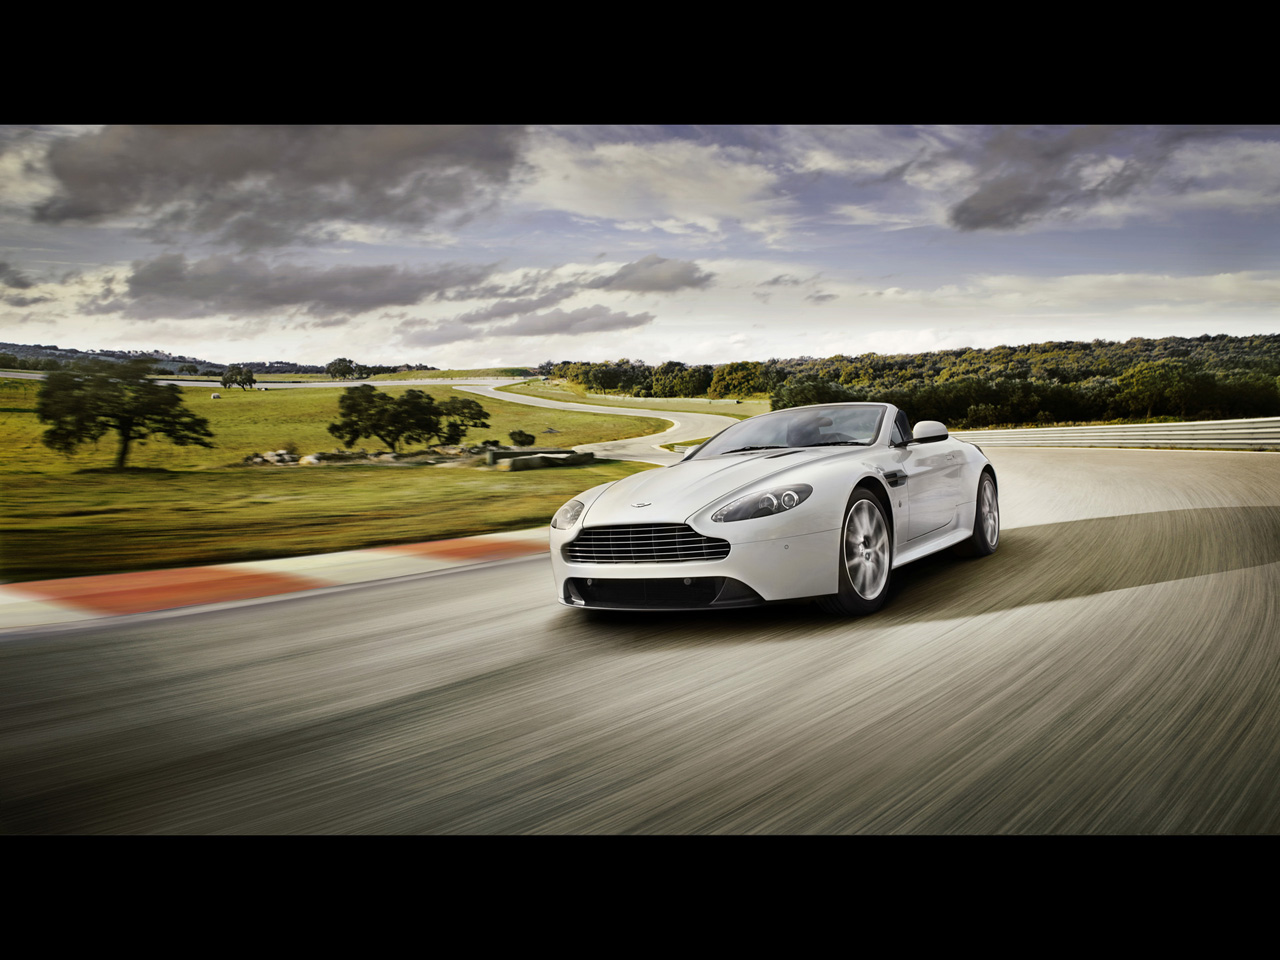 Best Aston Martin Vantage Background for mobile